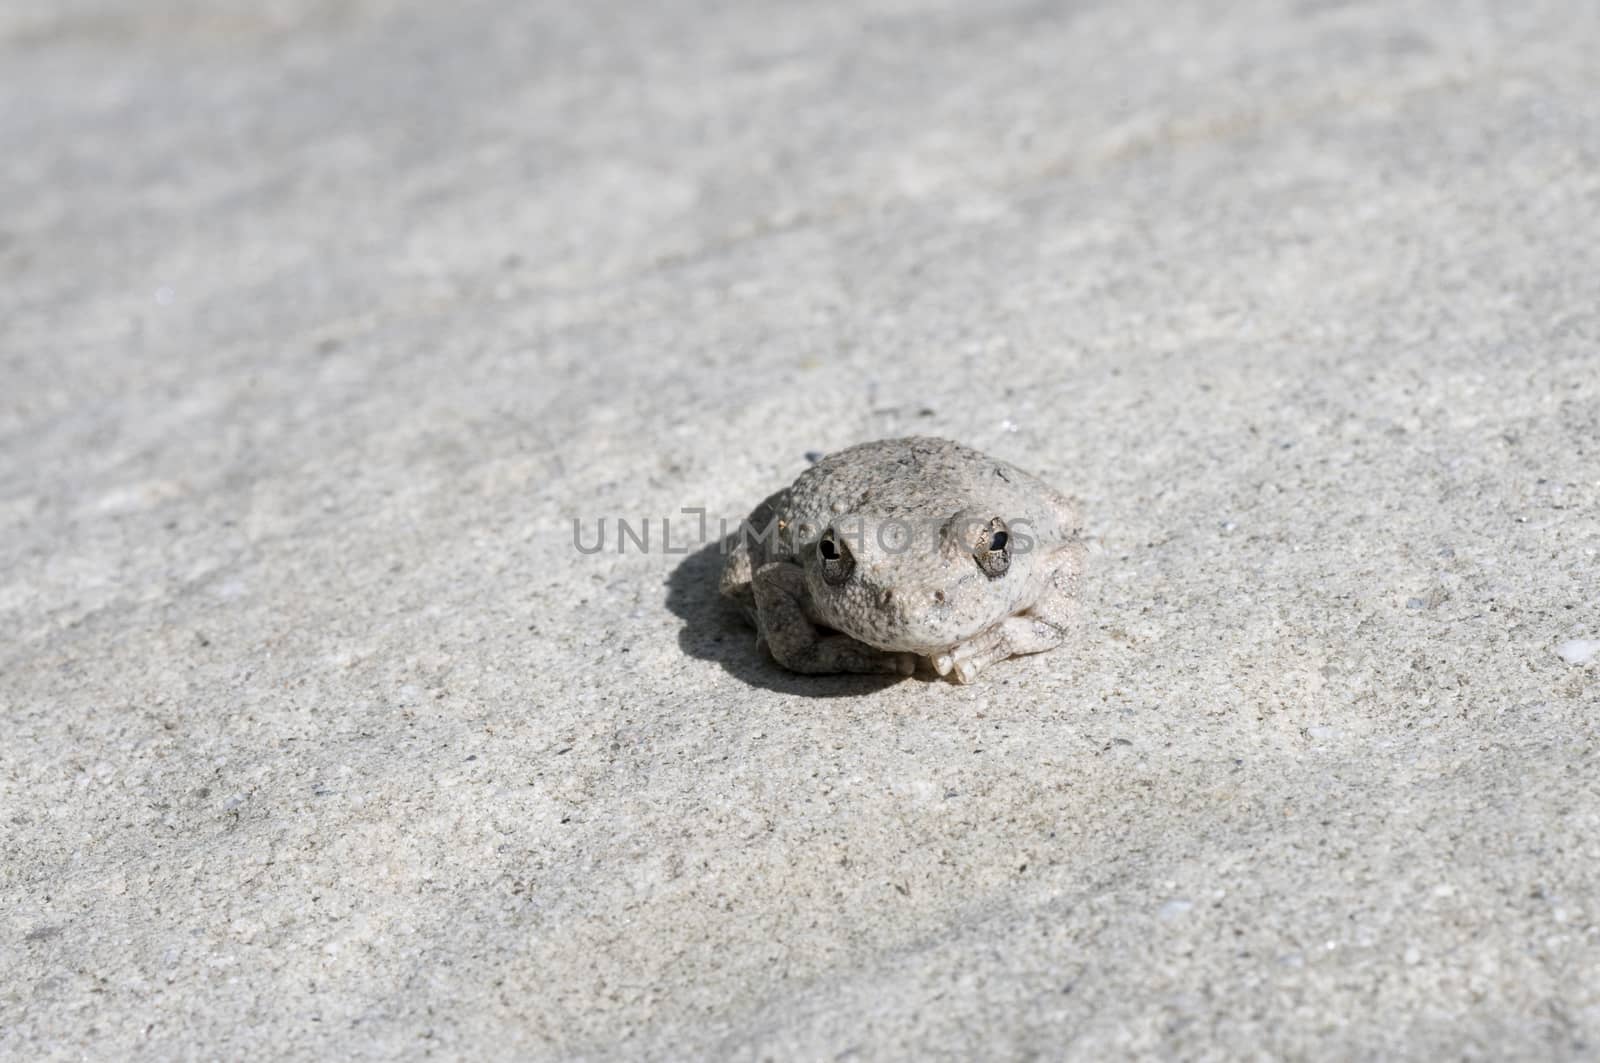 A wild grey Californian Treefrog blending into stone